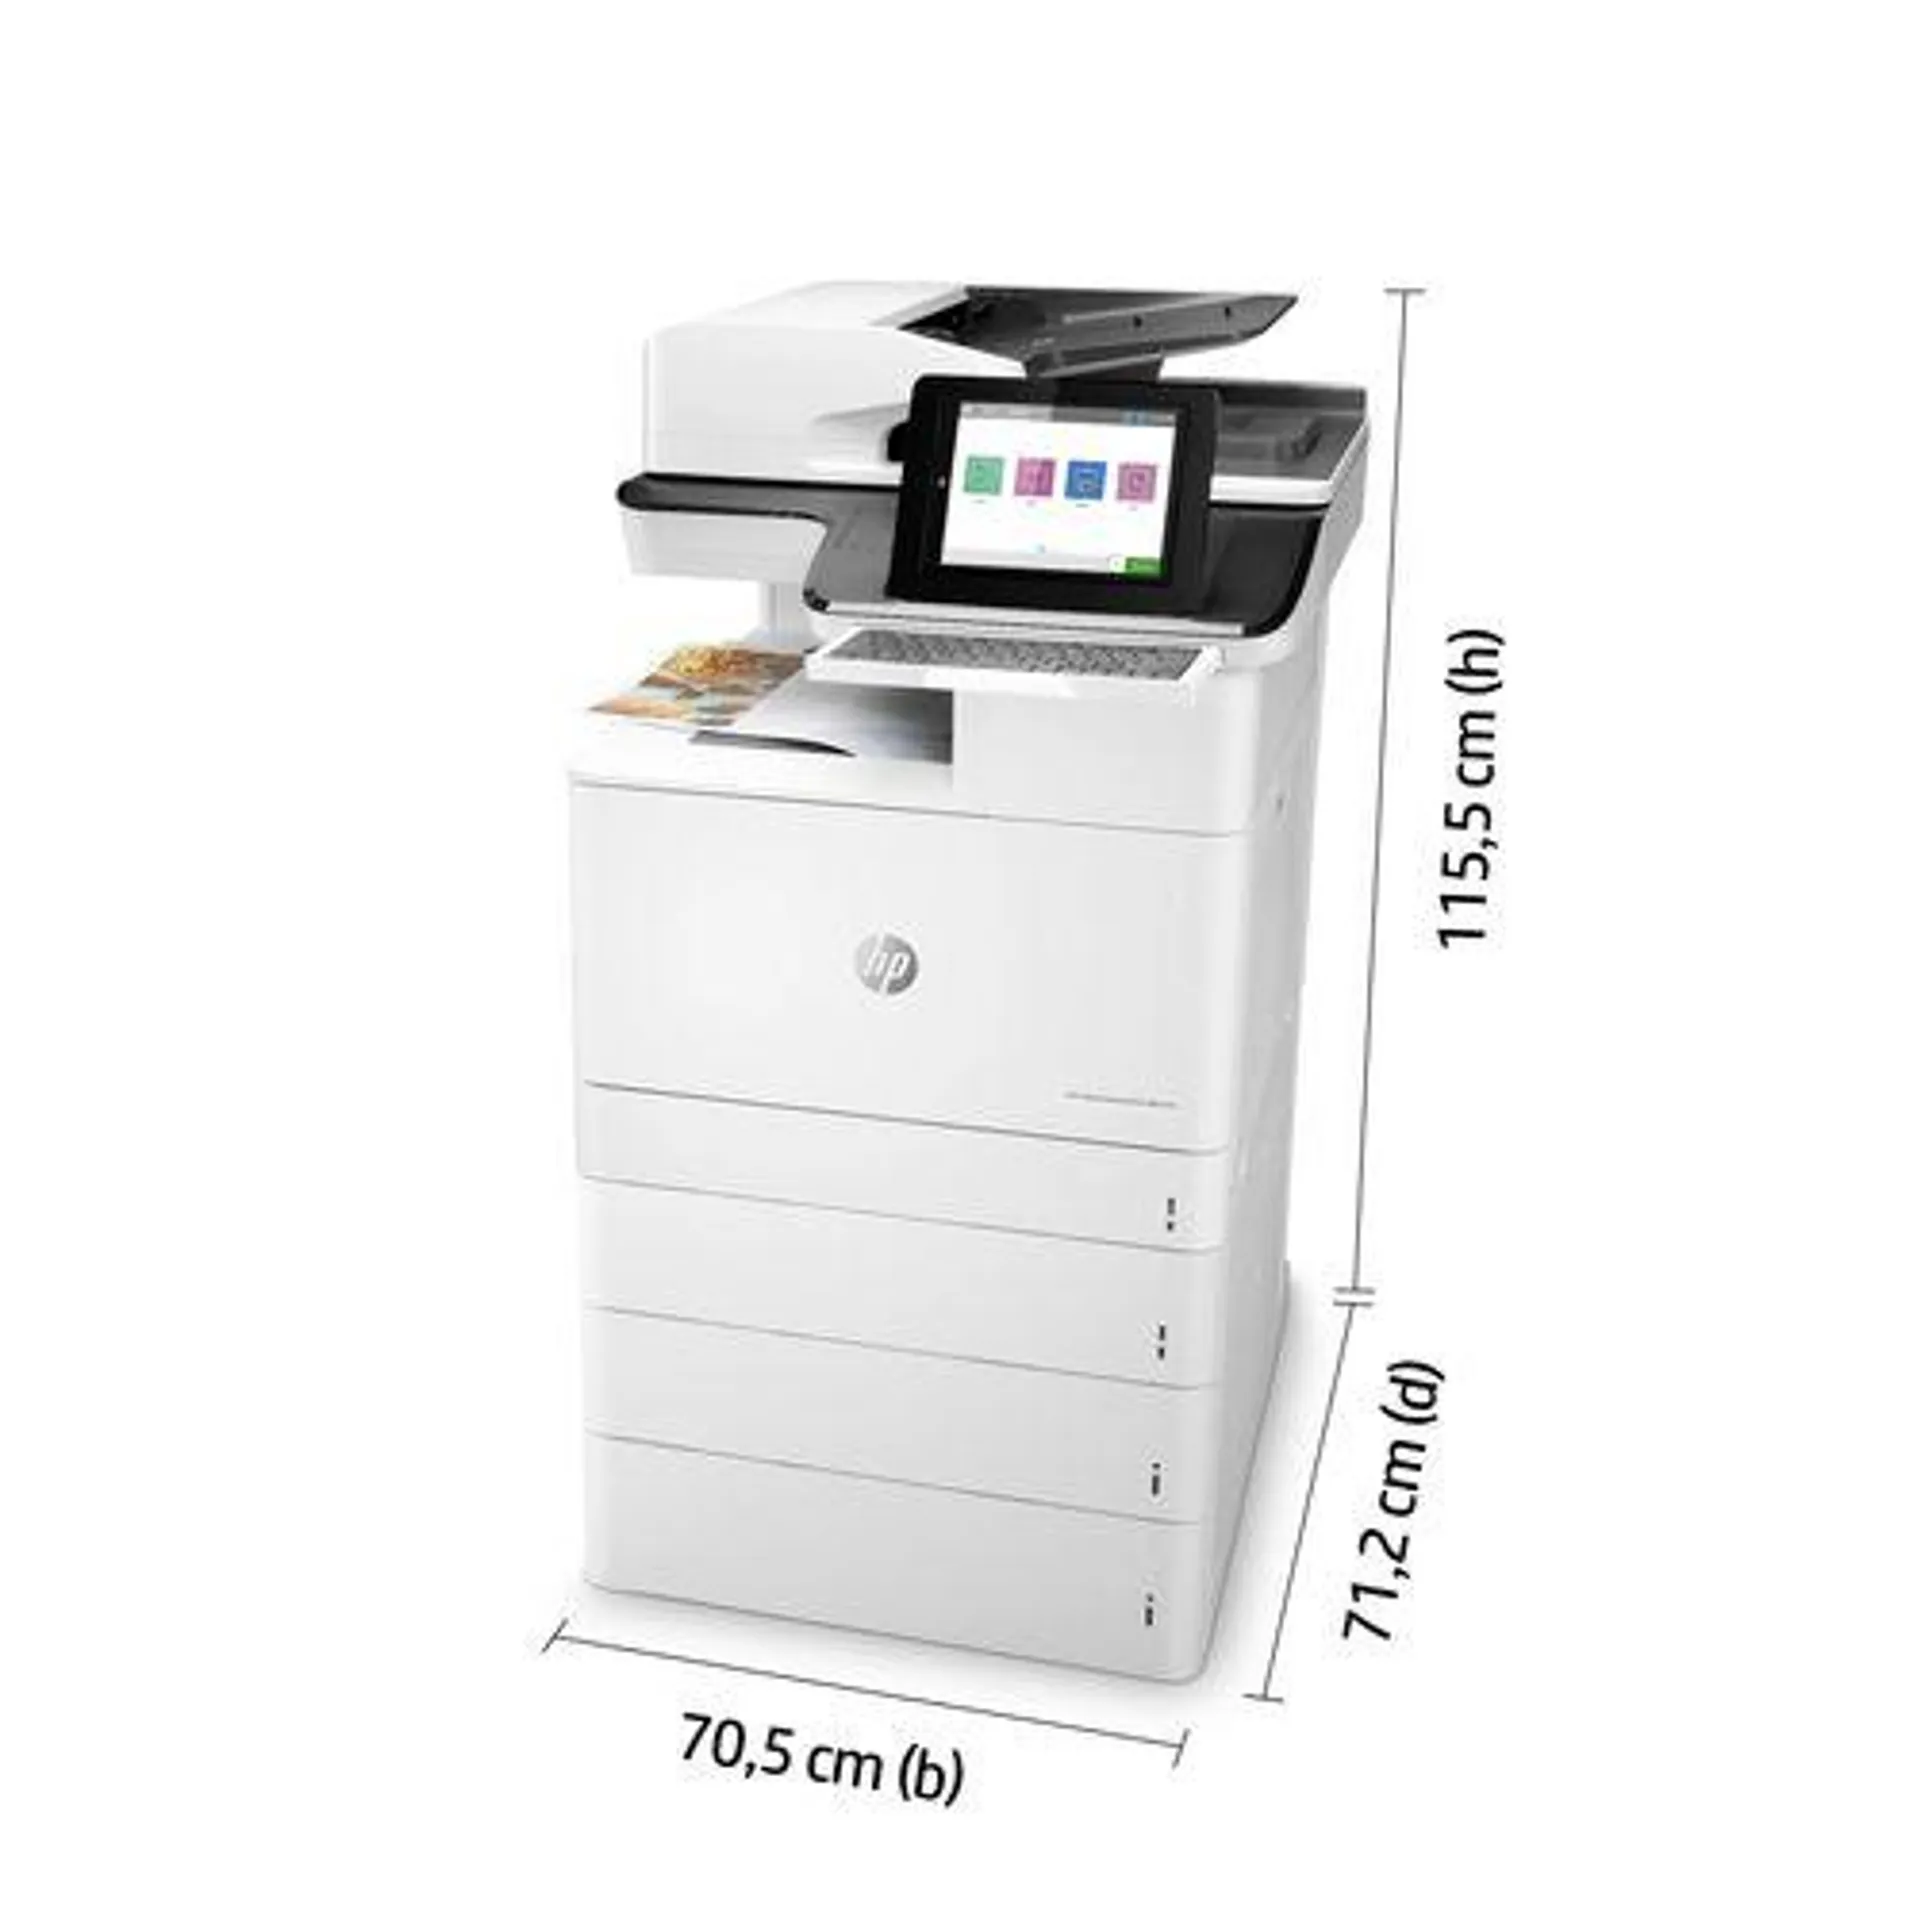 HP Color LaserJet Enterprise Flow MFP M776z, Printen, kopiëren, scannen en faxen, Afdrukken via USB-